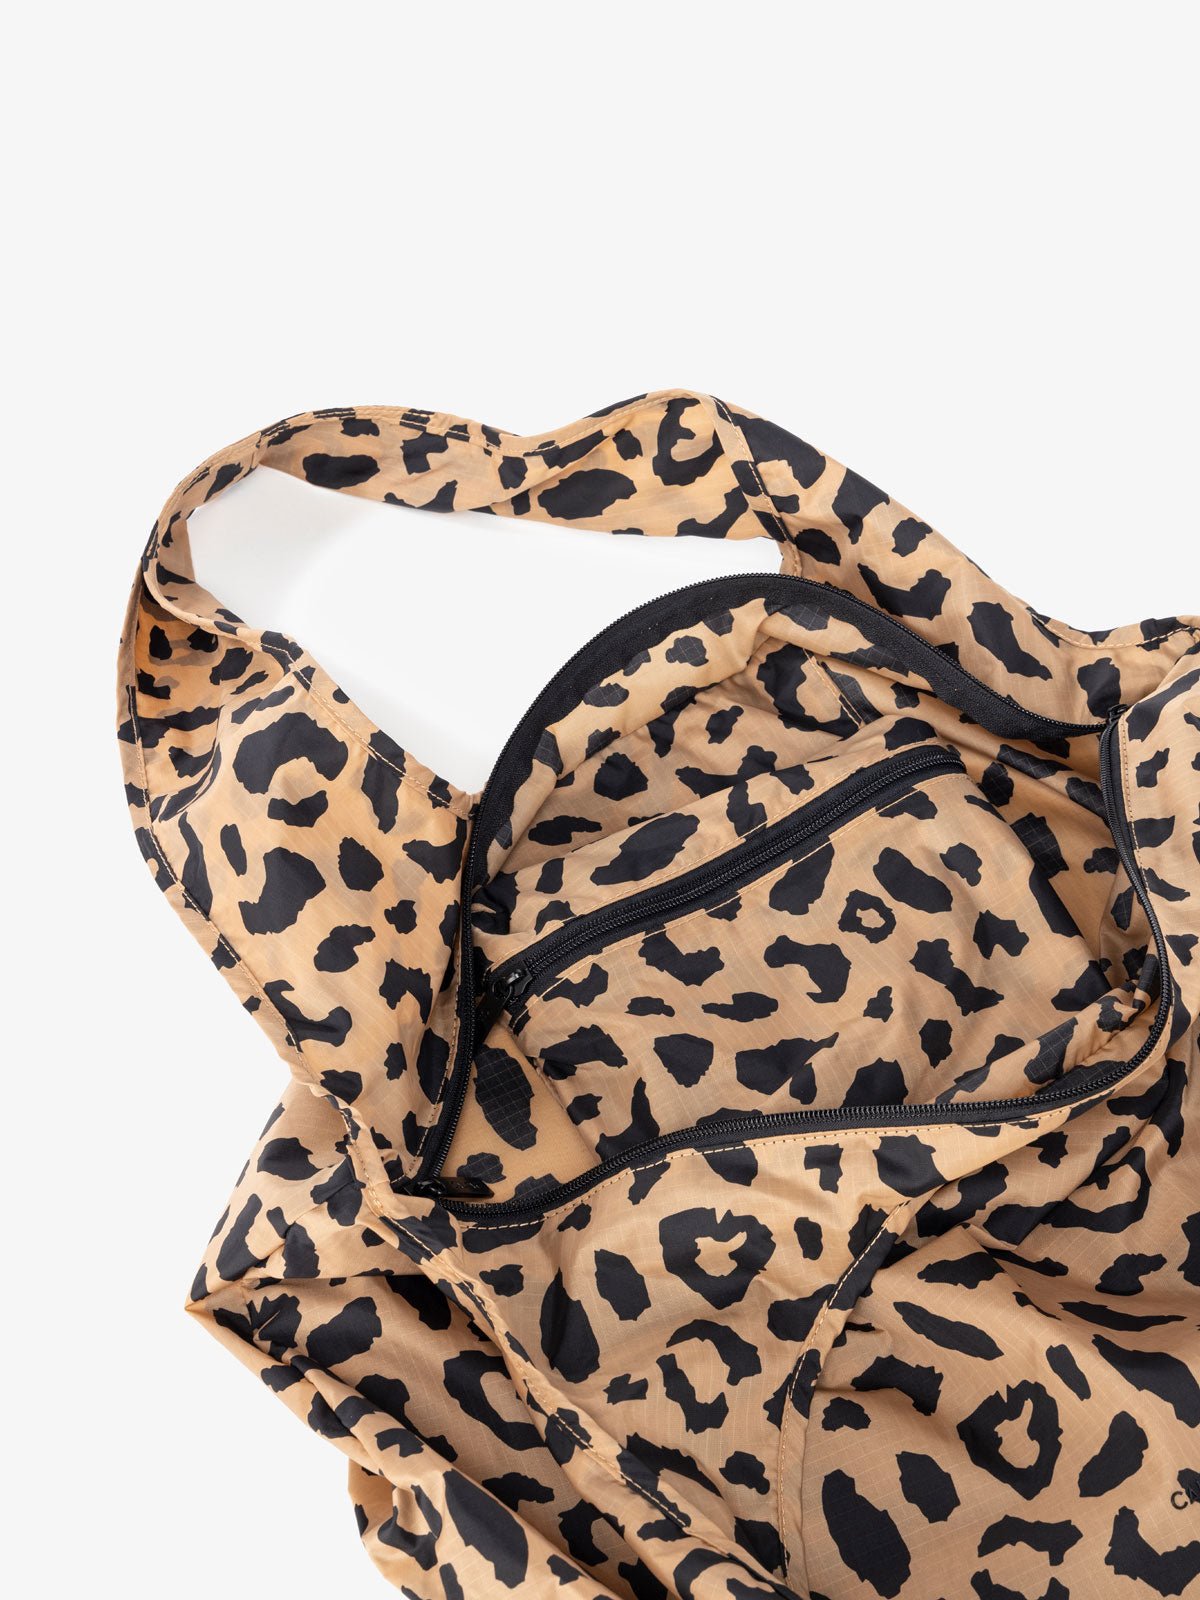 Cheetah print compakt tote bag part of compakt duo